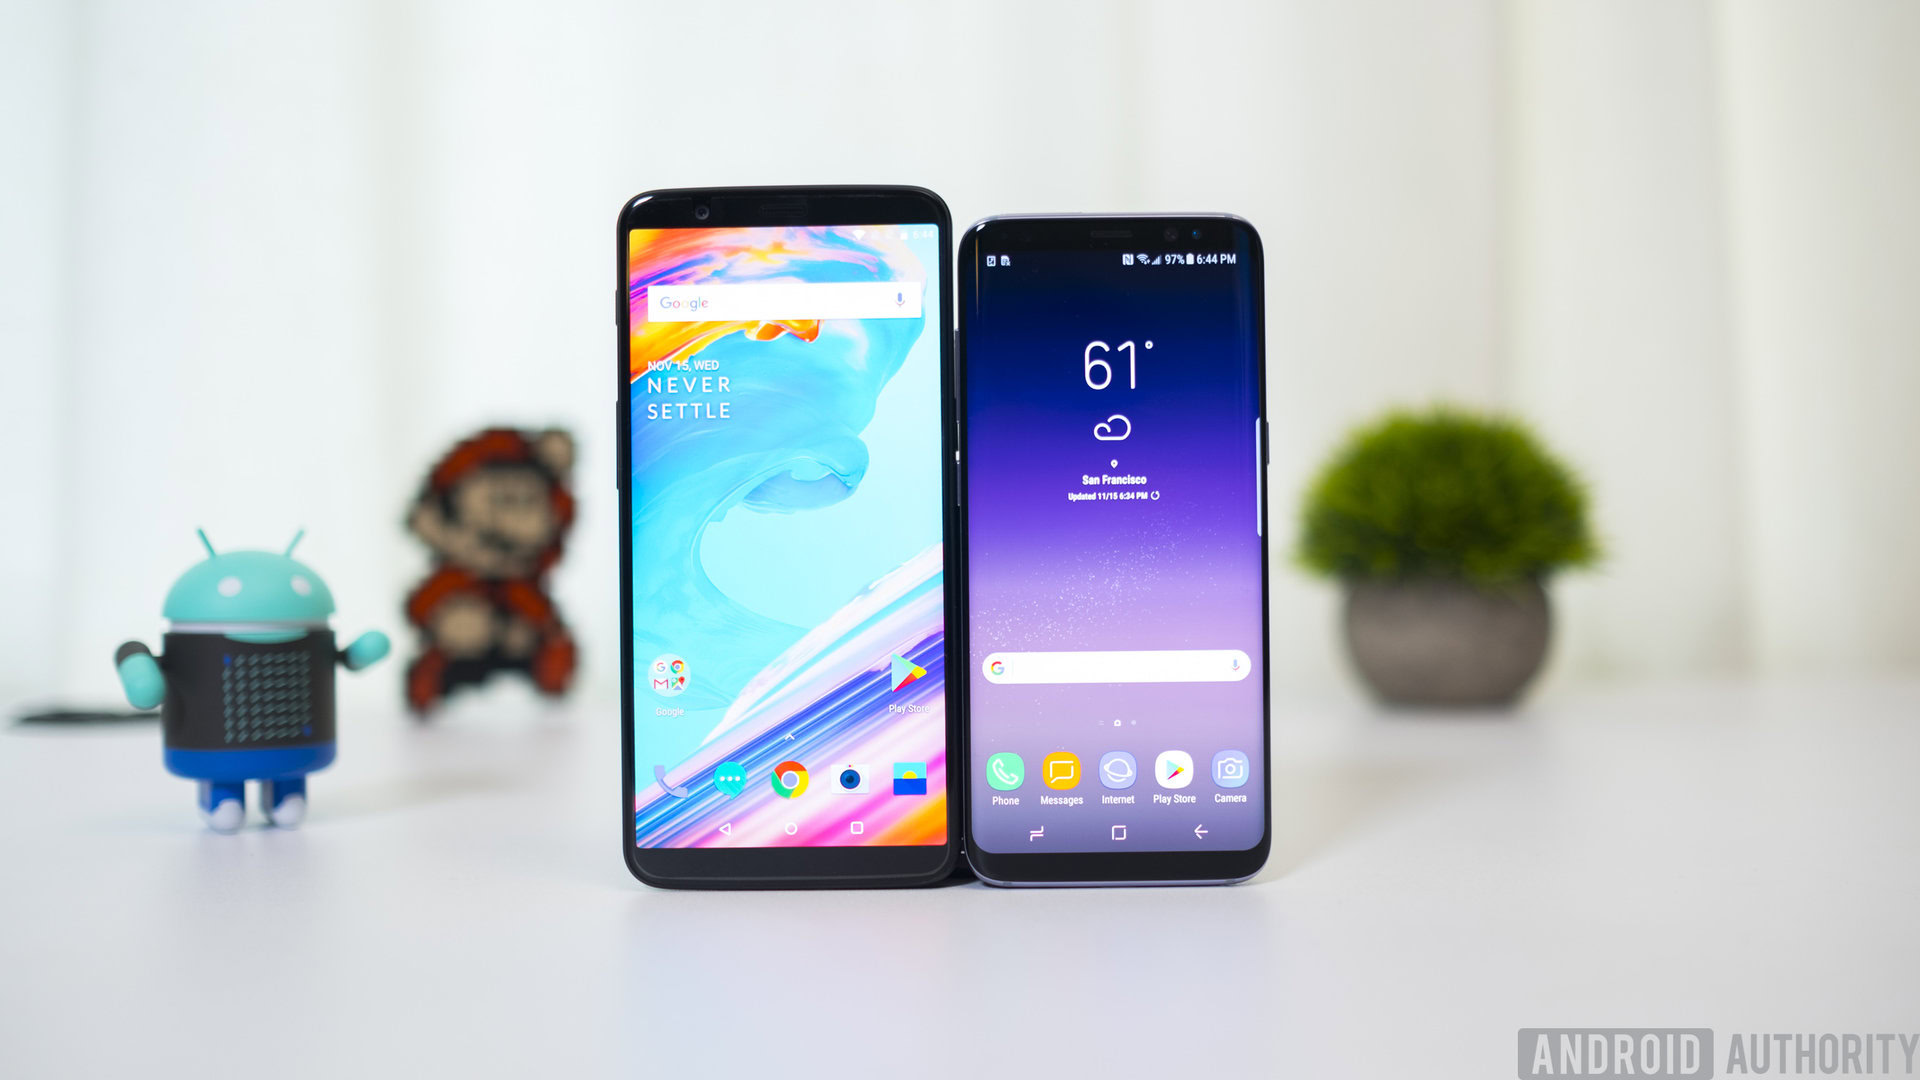 Samsung galaxy s8 vs oneplus 5t